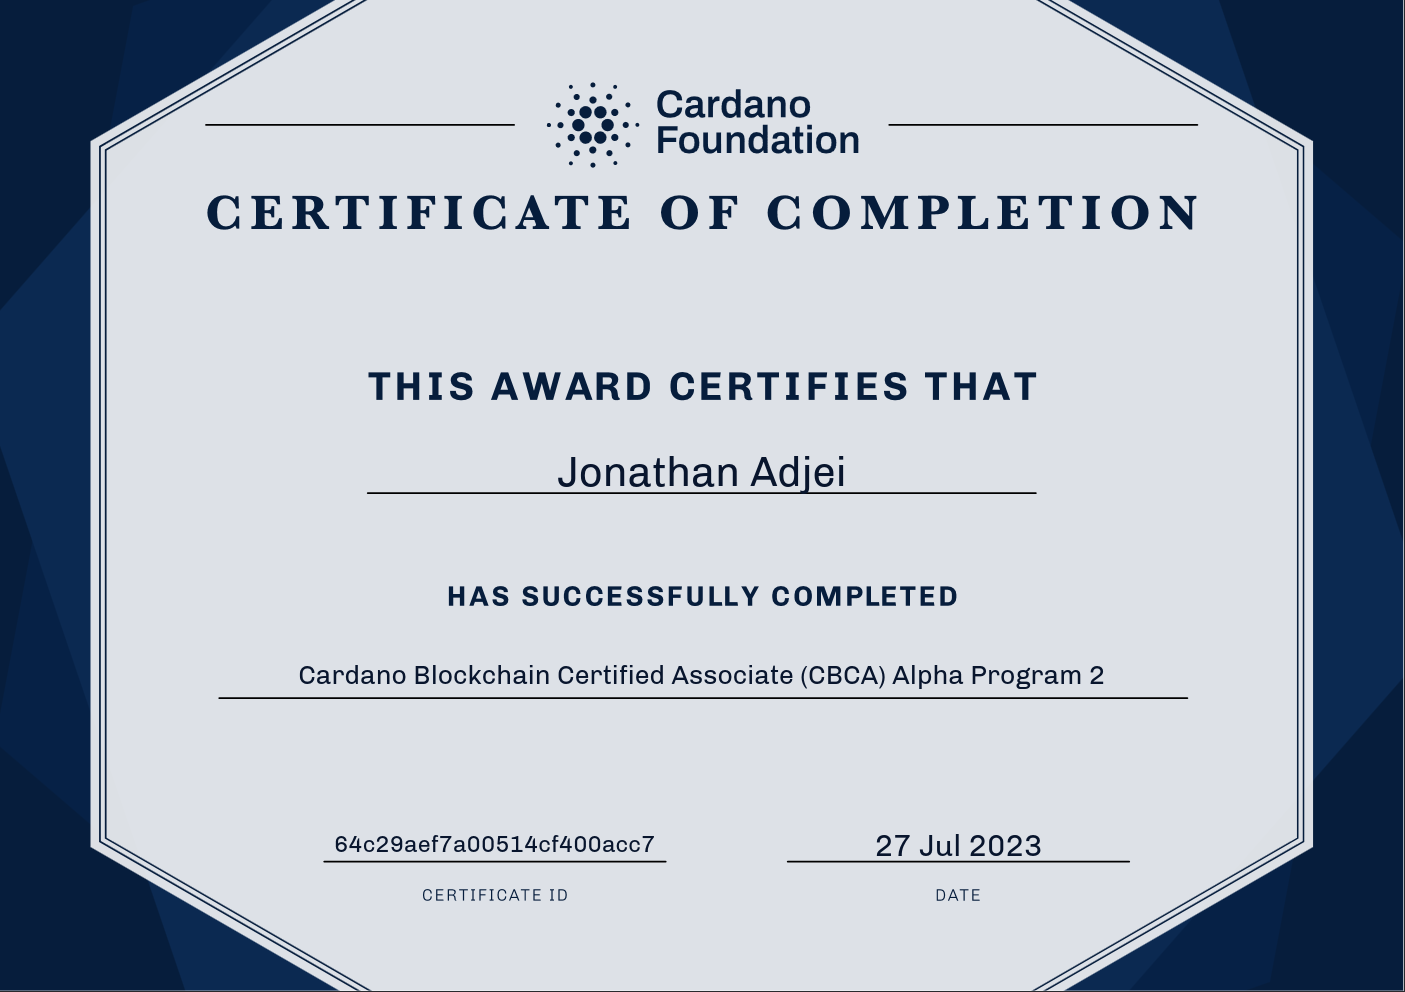 Jonathan Completes Cardano Blockchain Certified Associate (CBCA) Alpha Program